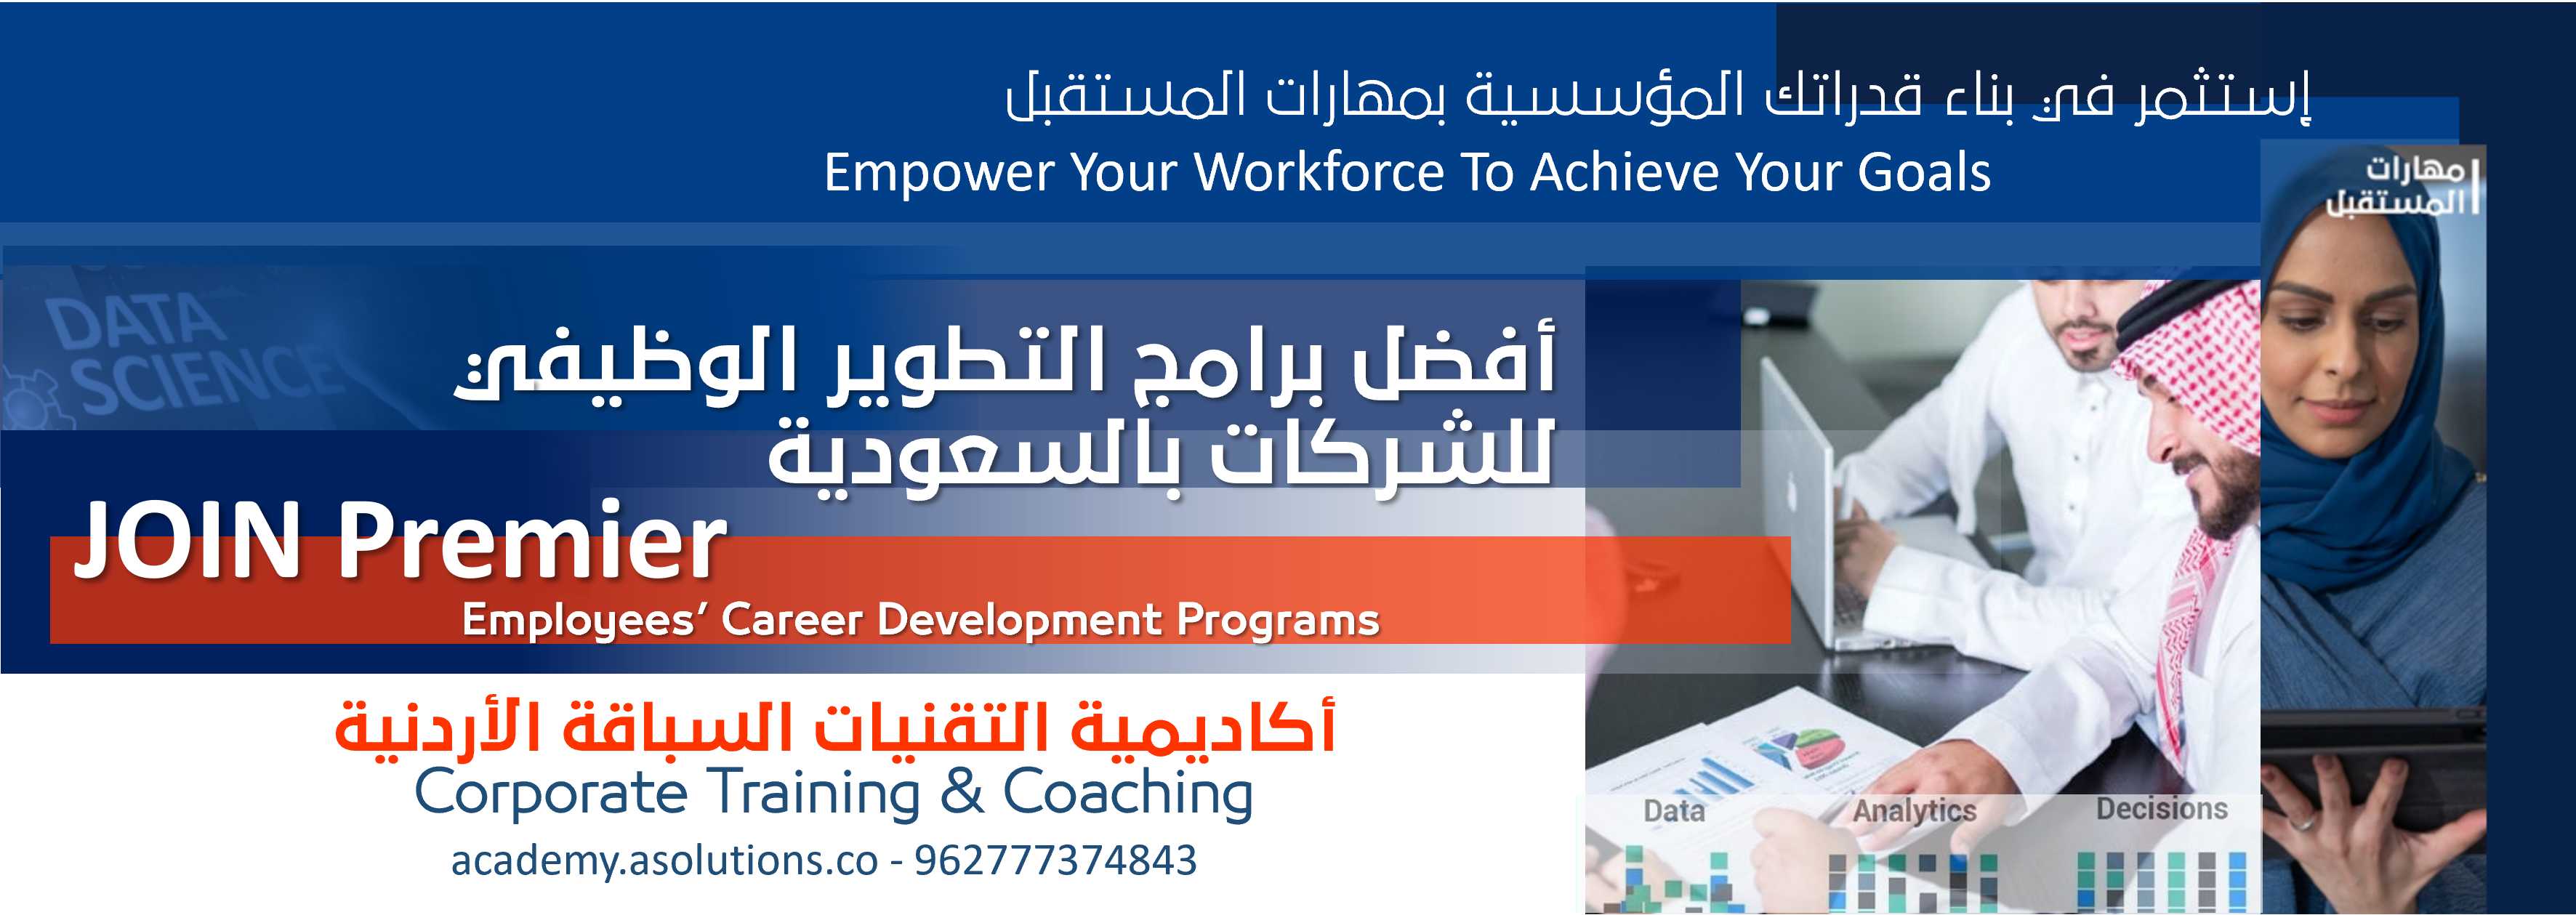 Employee's Development Programs